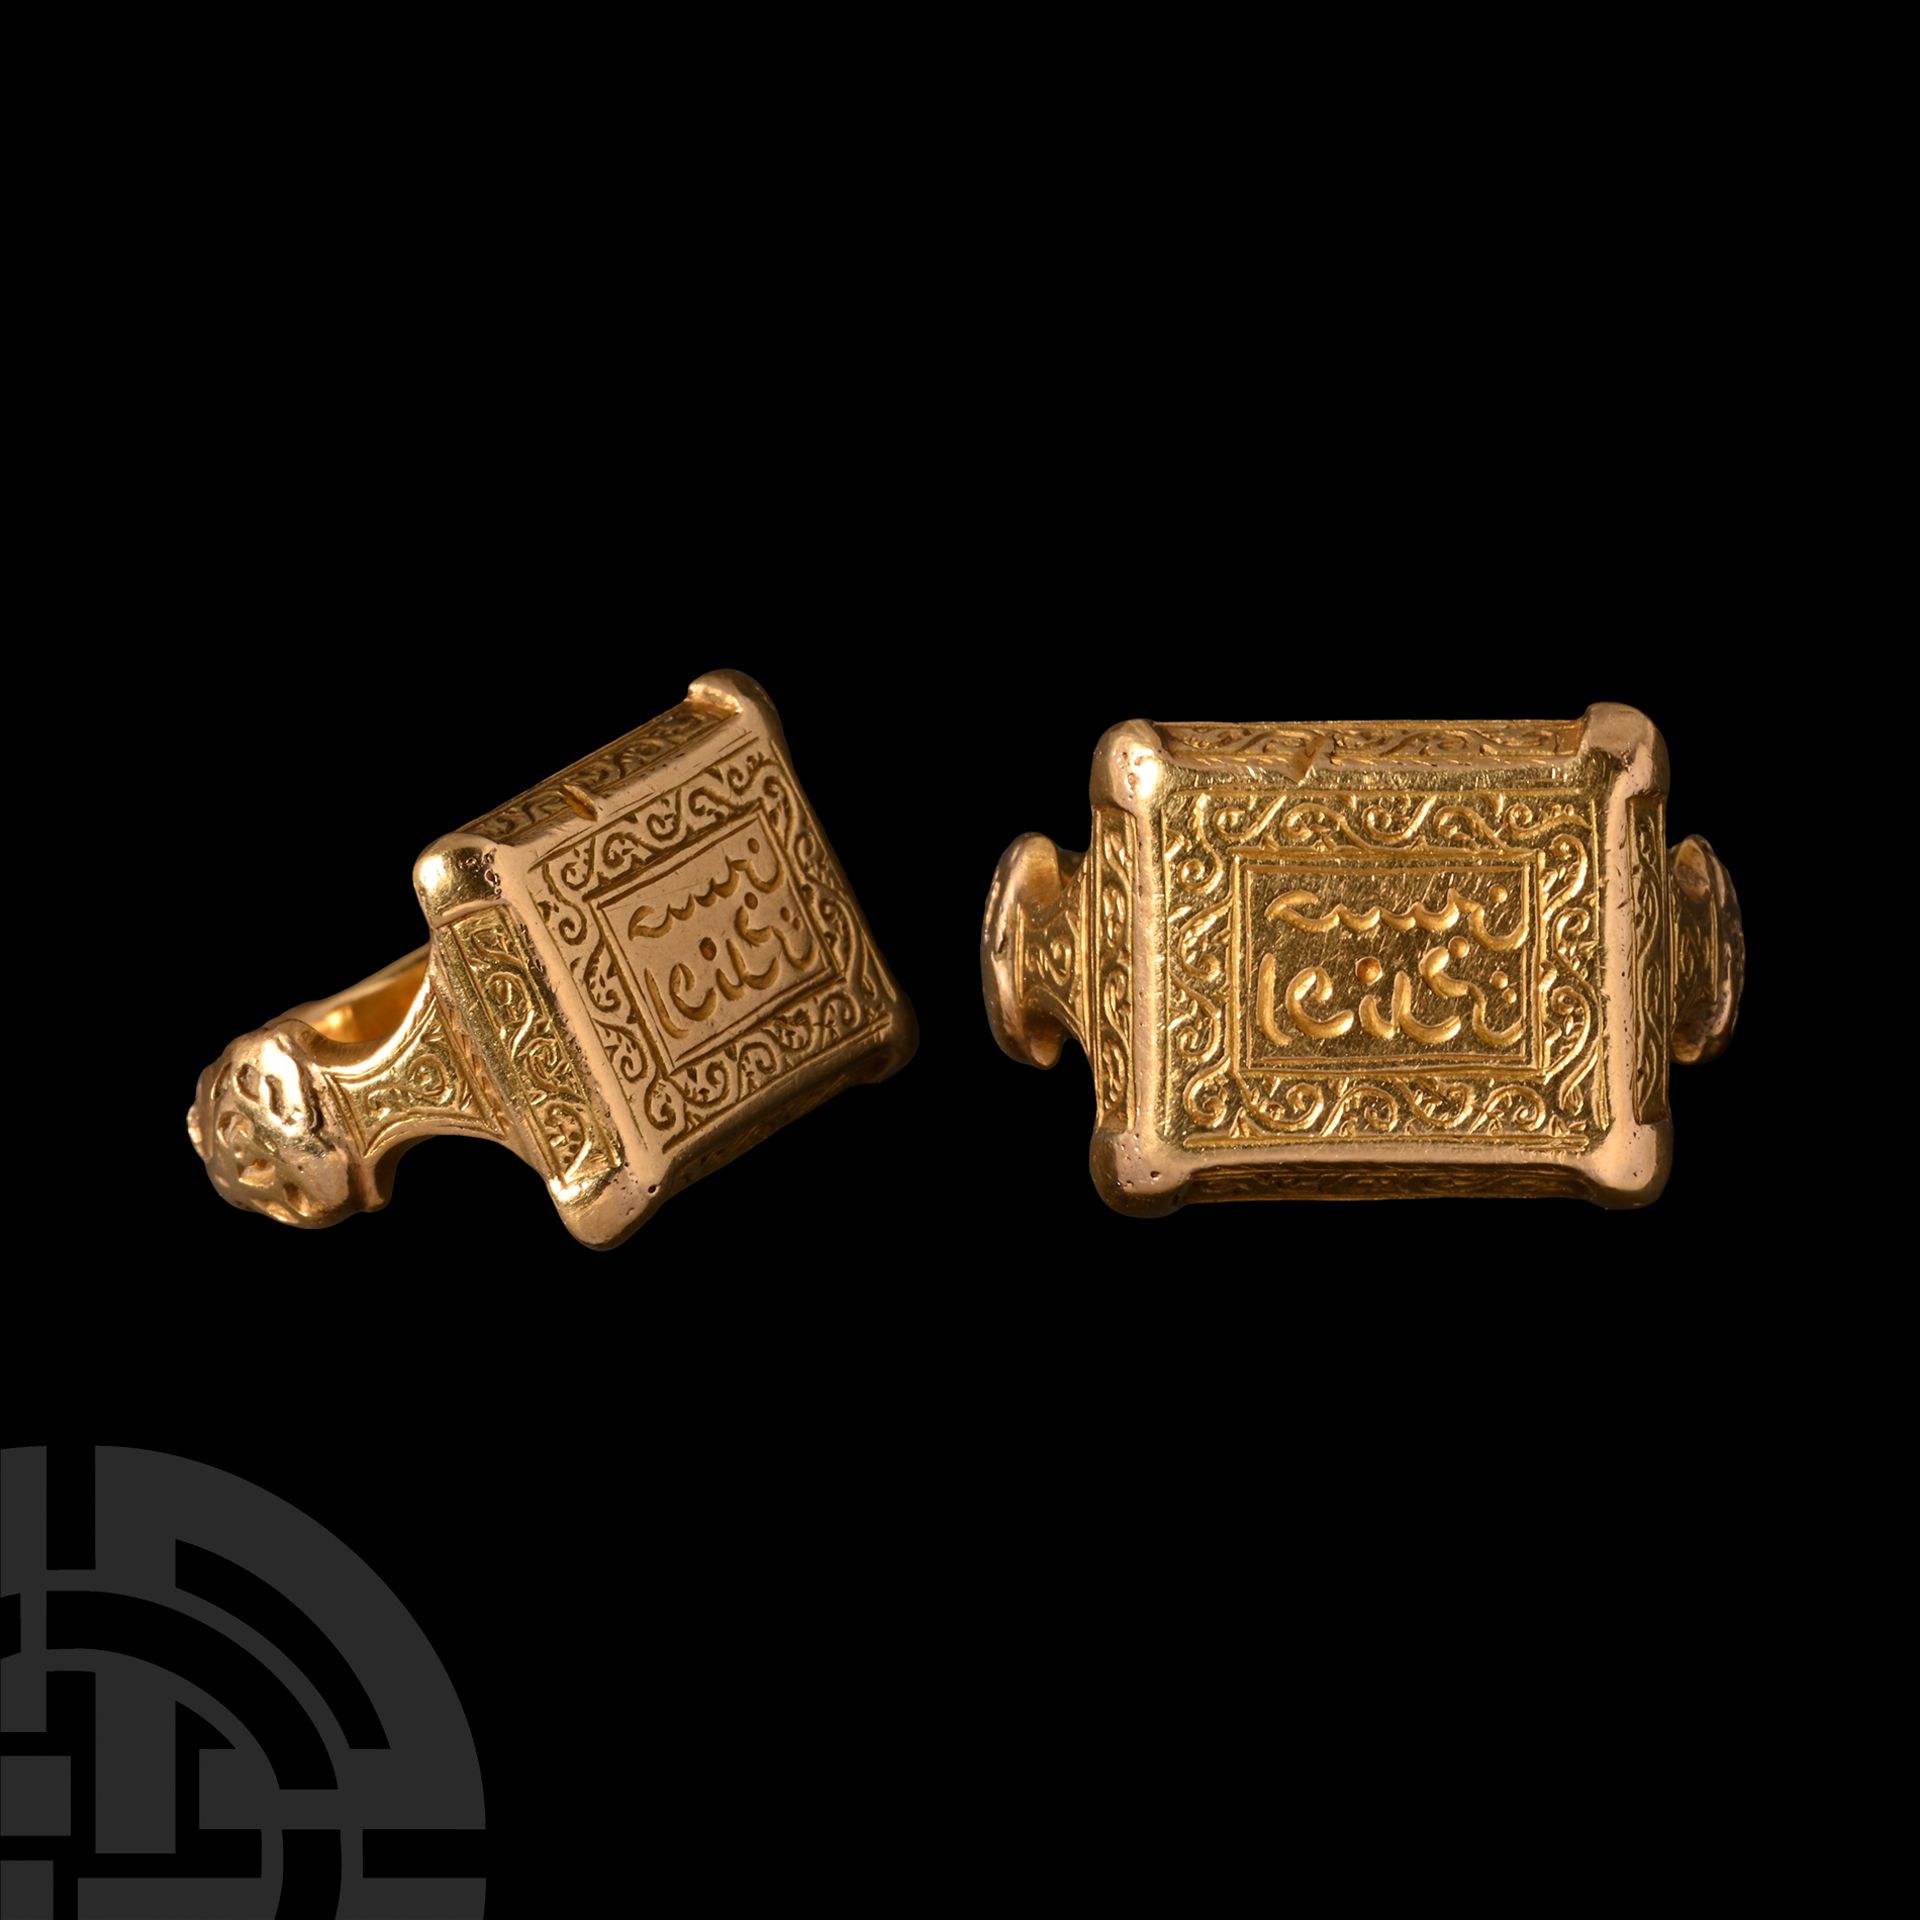 Seljuk Gold Ring with Inscription